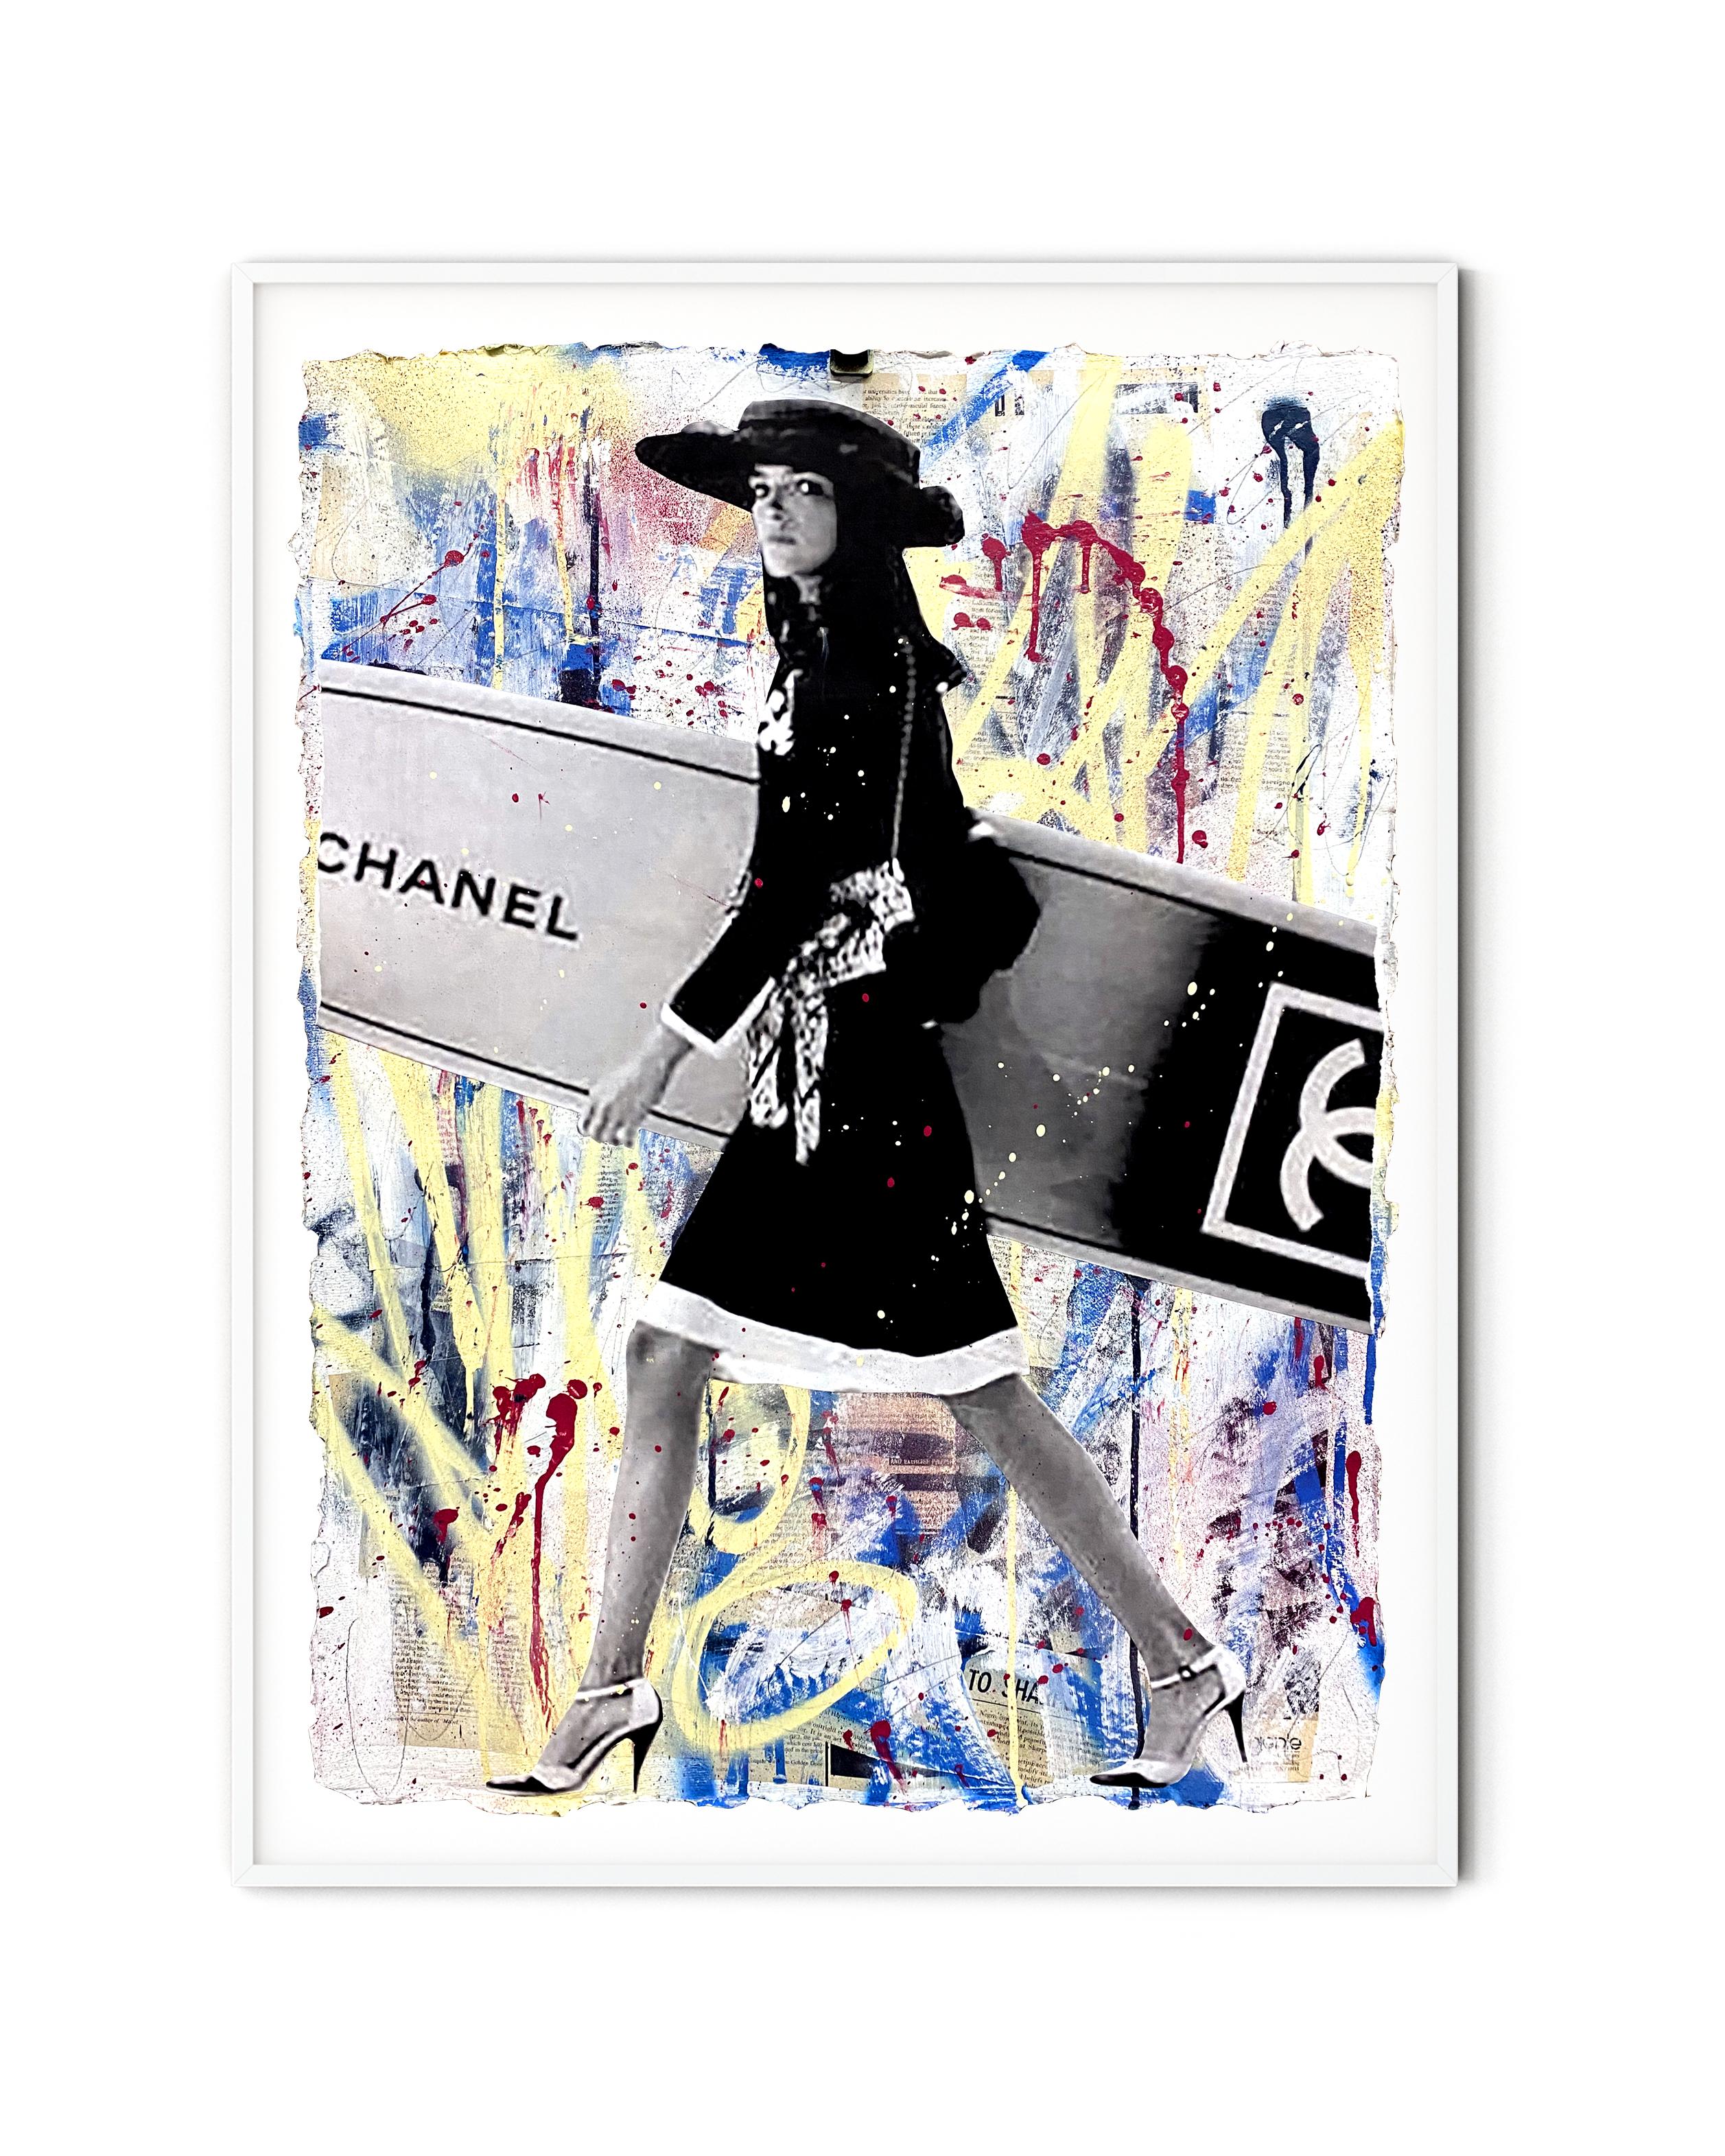 Chanel Surfer - Mixed Media Art by Seek One